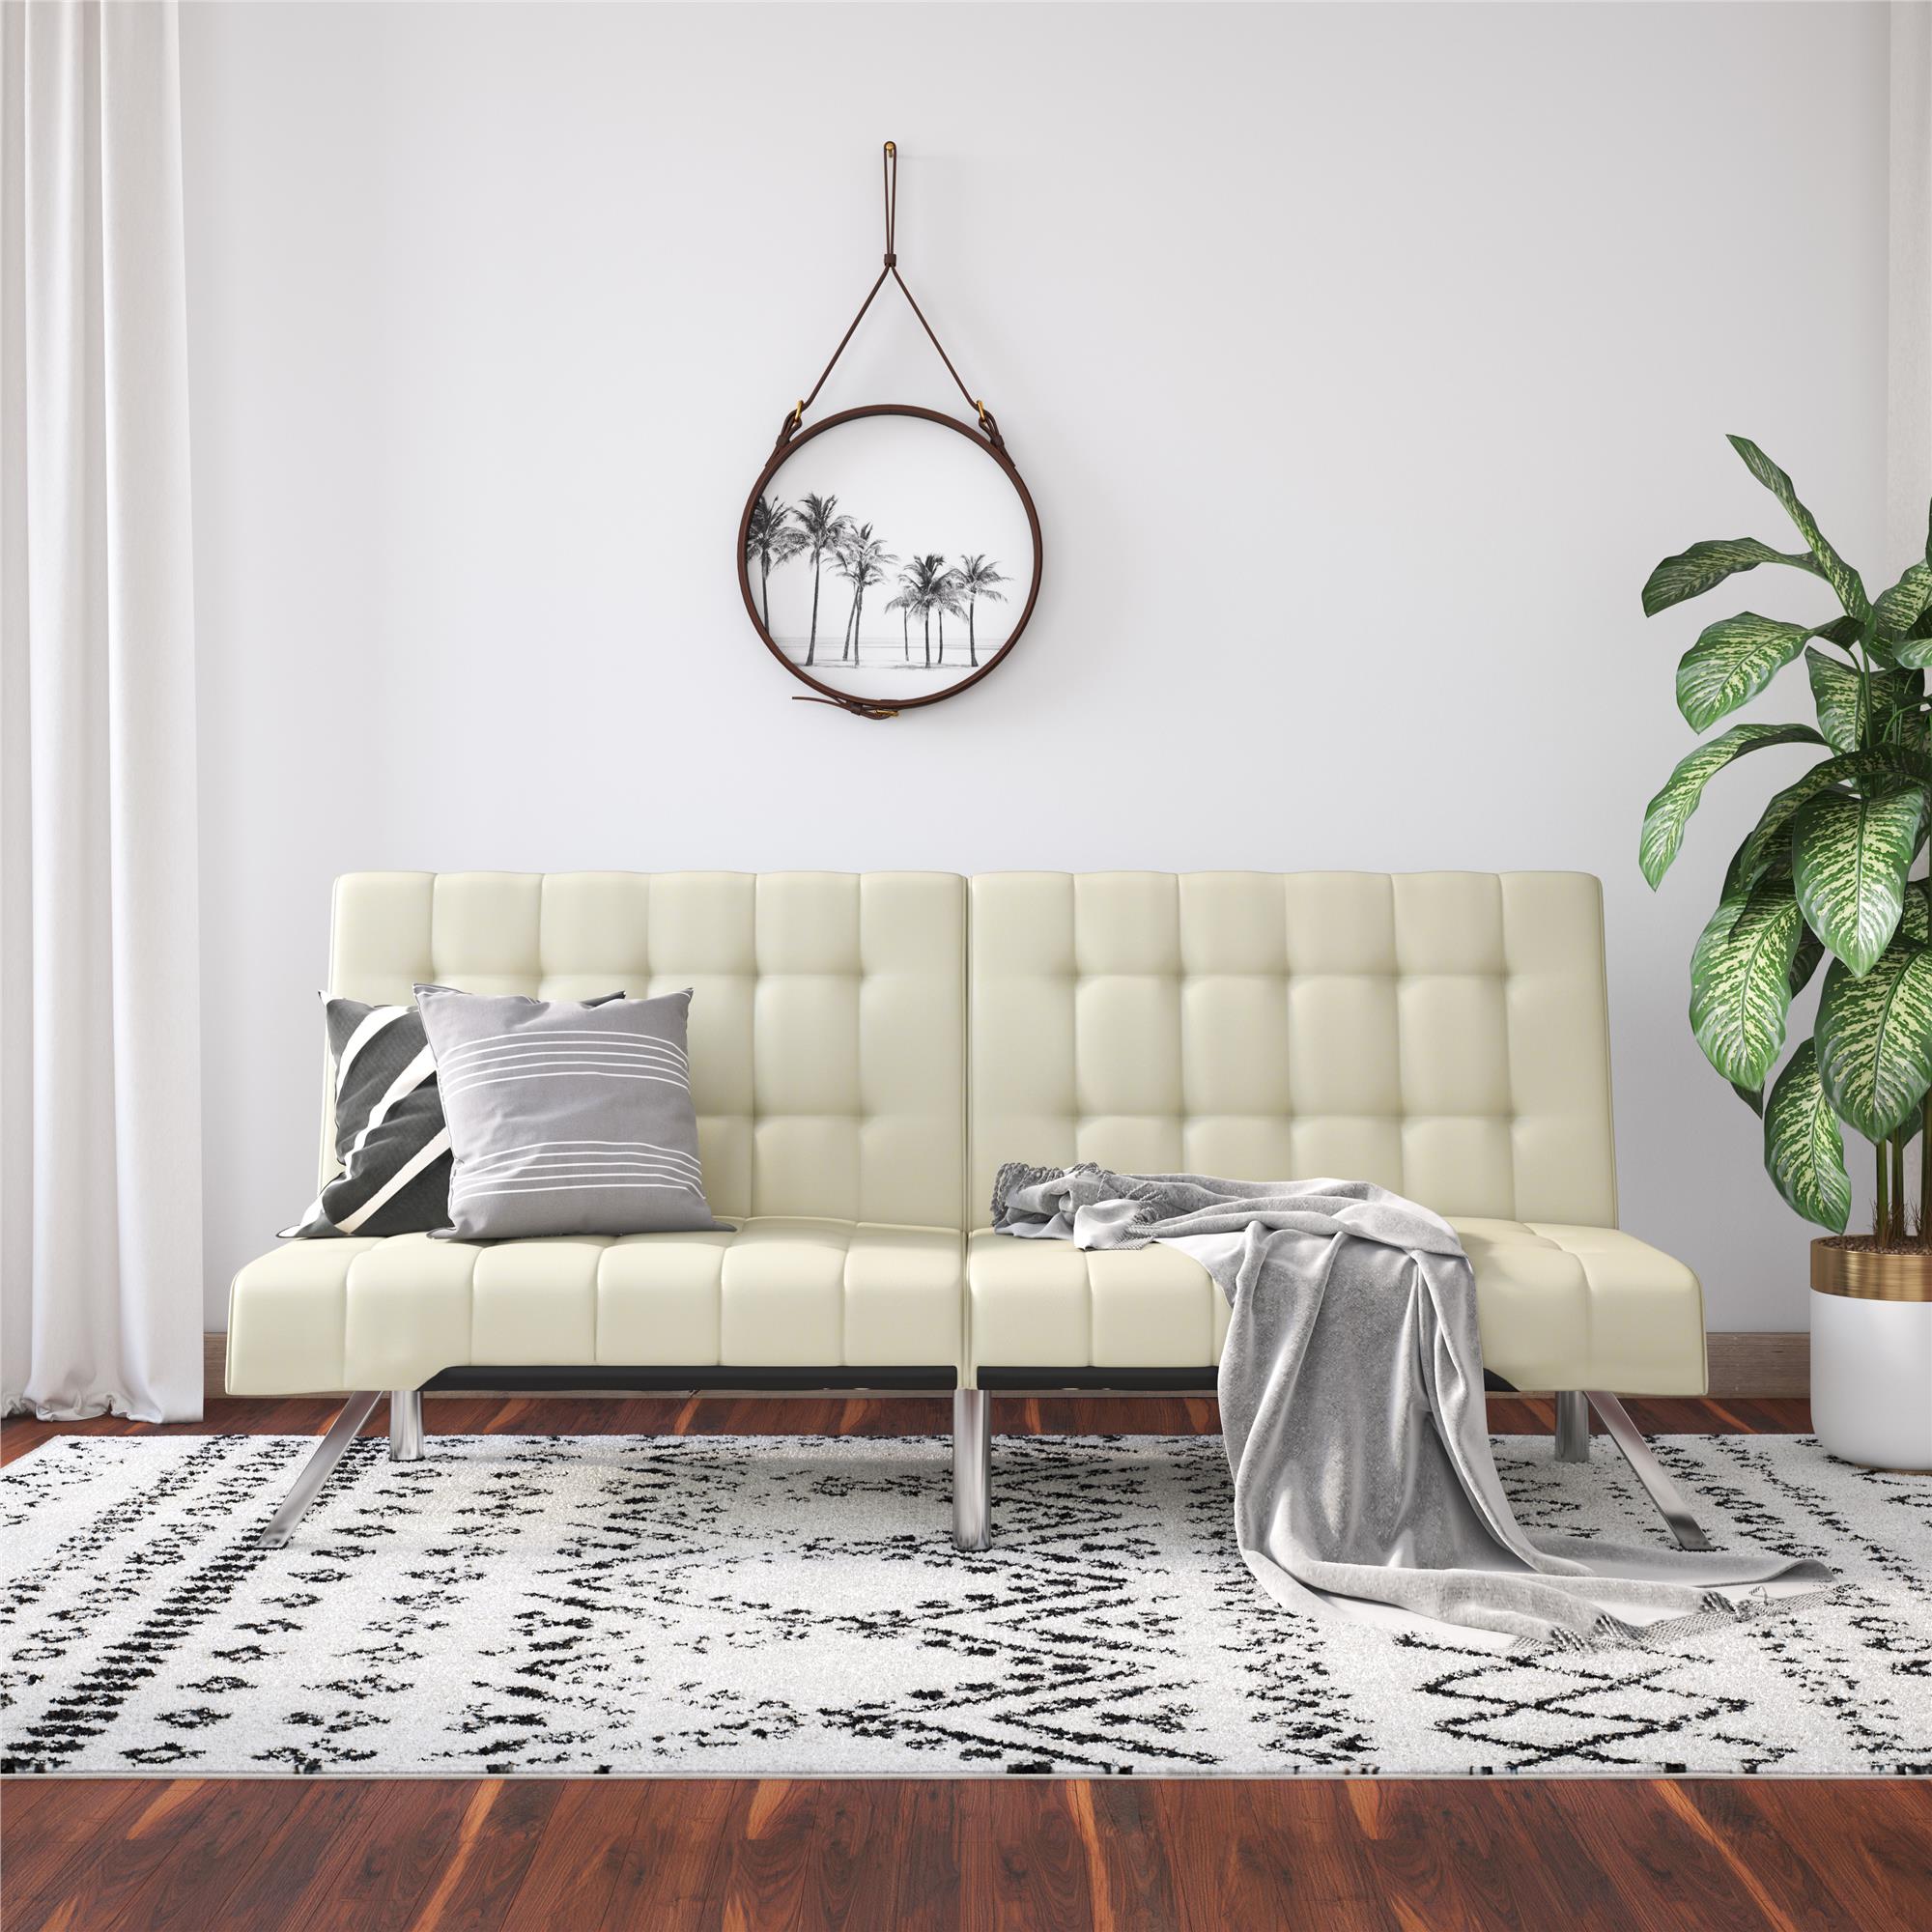 DHP Emily Convertible Tufted Futon Sofa, Vanilla Faux Leather - image 1 of 21